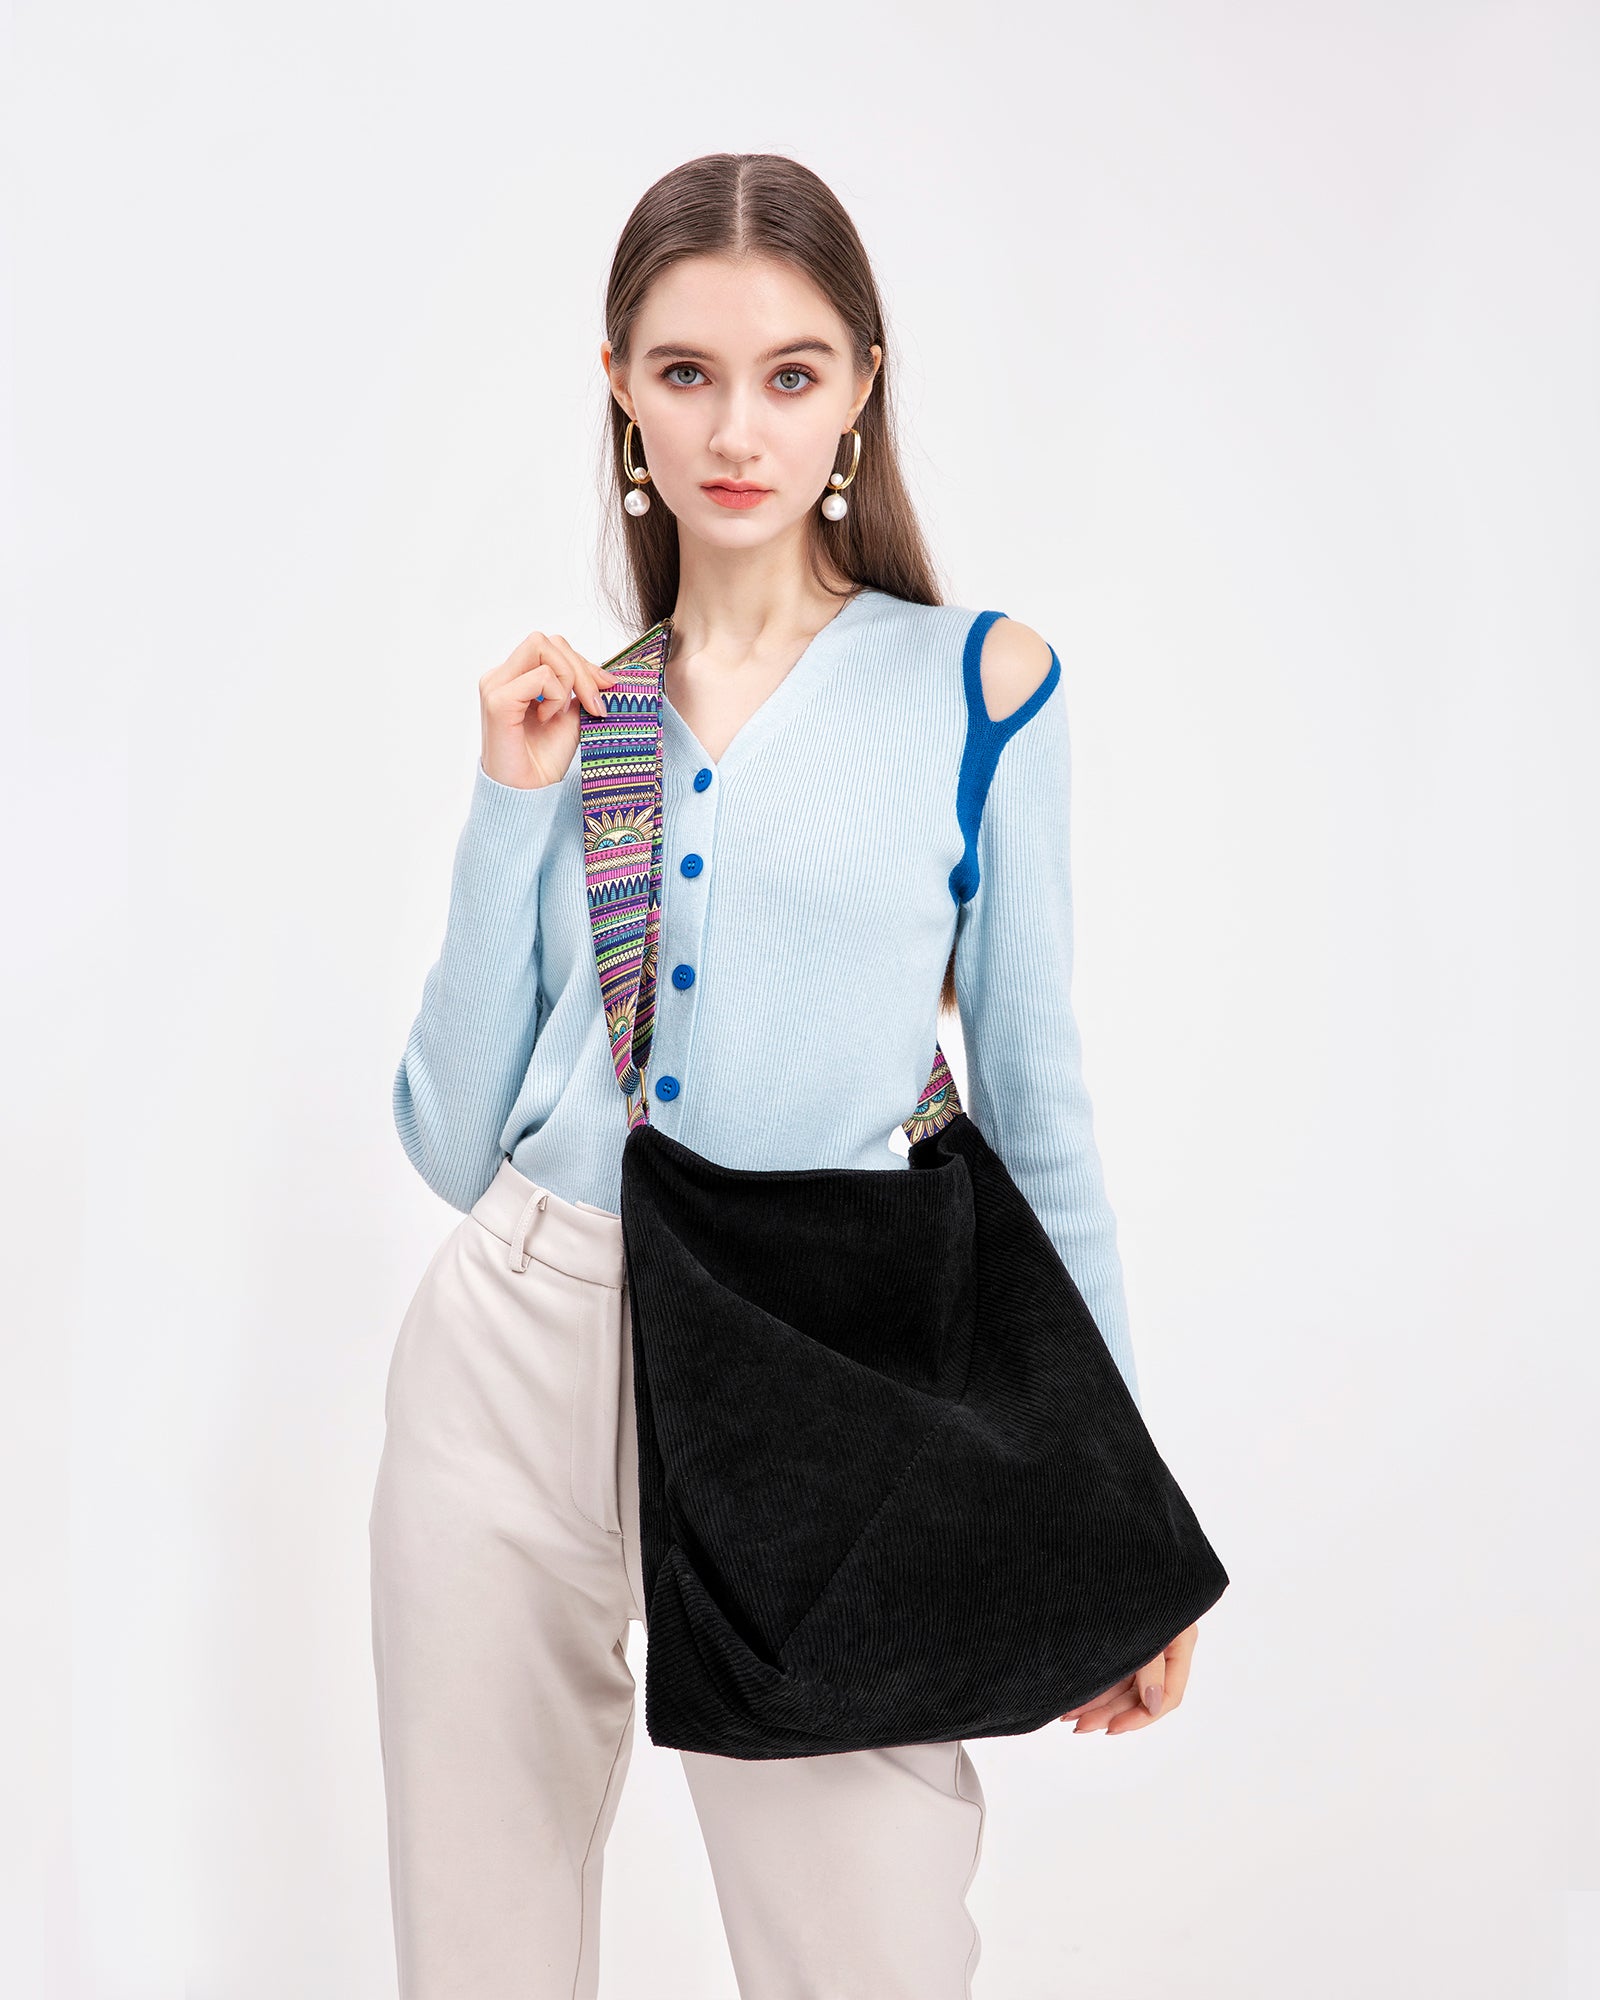  Makukke Corduroy Totes Bag Women - Shoulder Hobo Bag Handbags  Crossbody Bag Big Capacity Shopping Purses : Clothing, Shoes & Jewelry